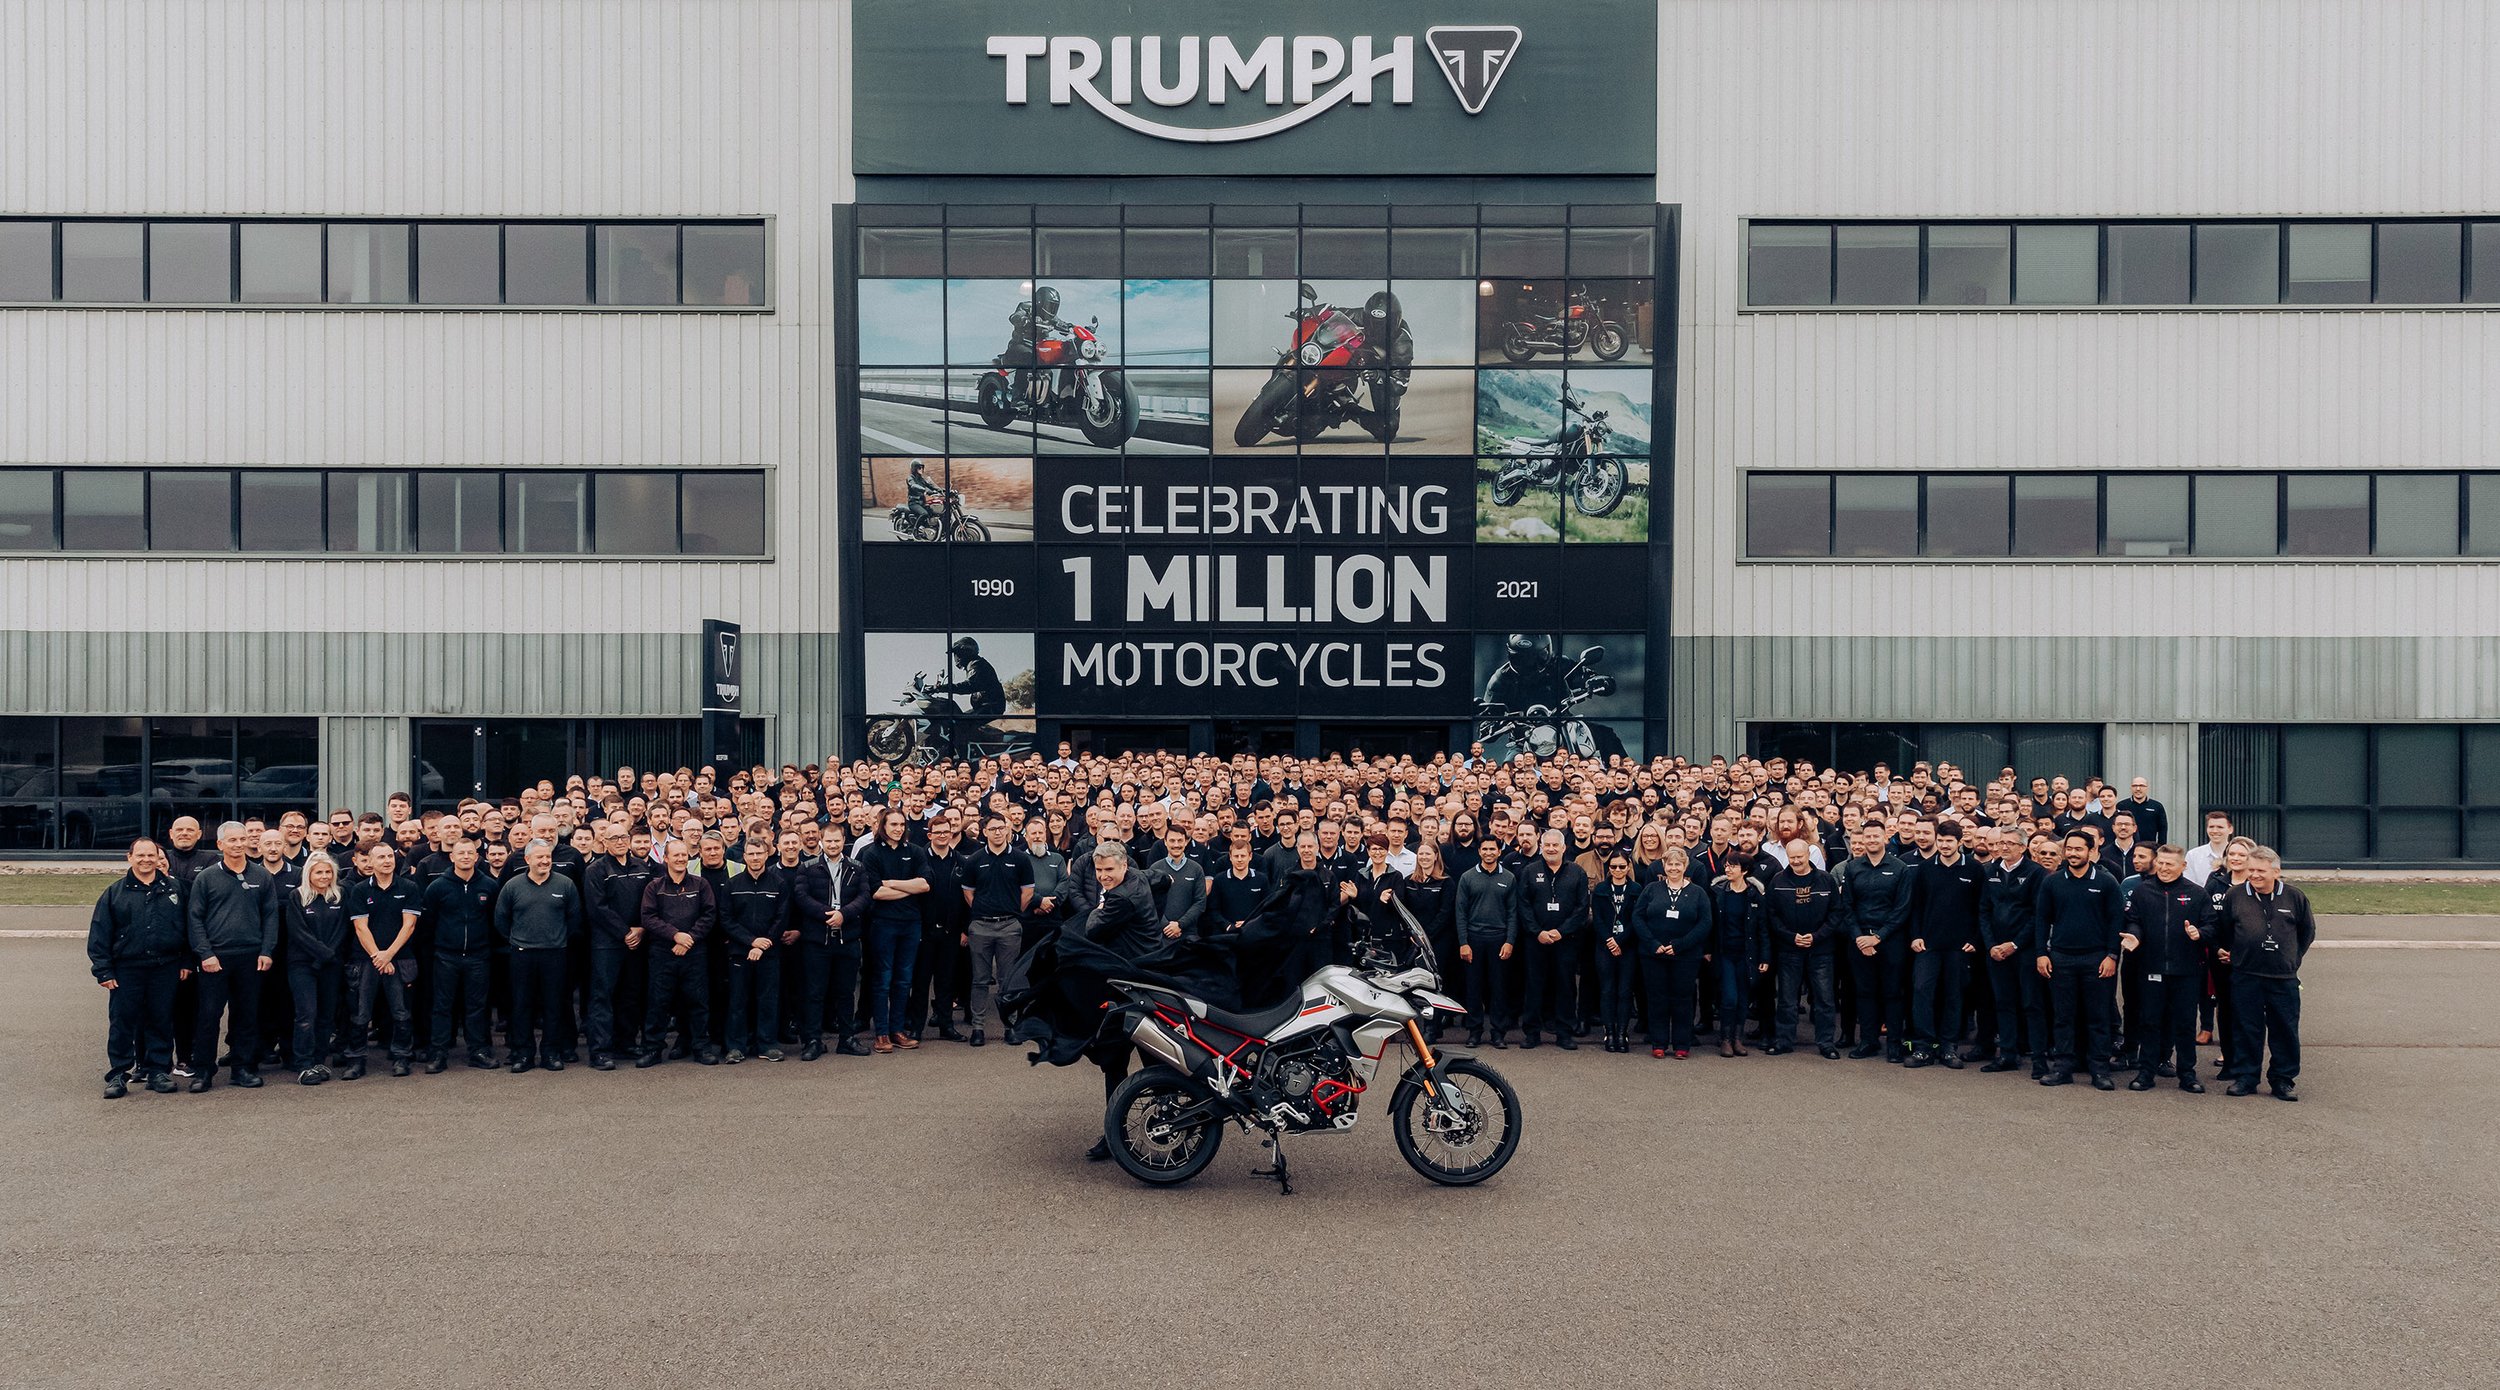 A view of Triumph machines in the celebration of Triumph's 120th